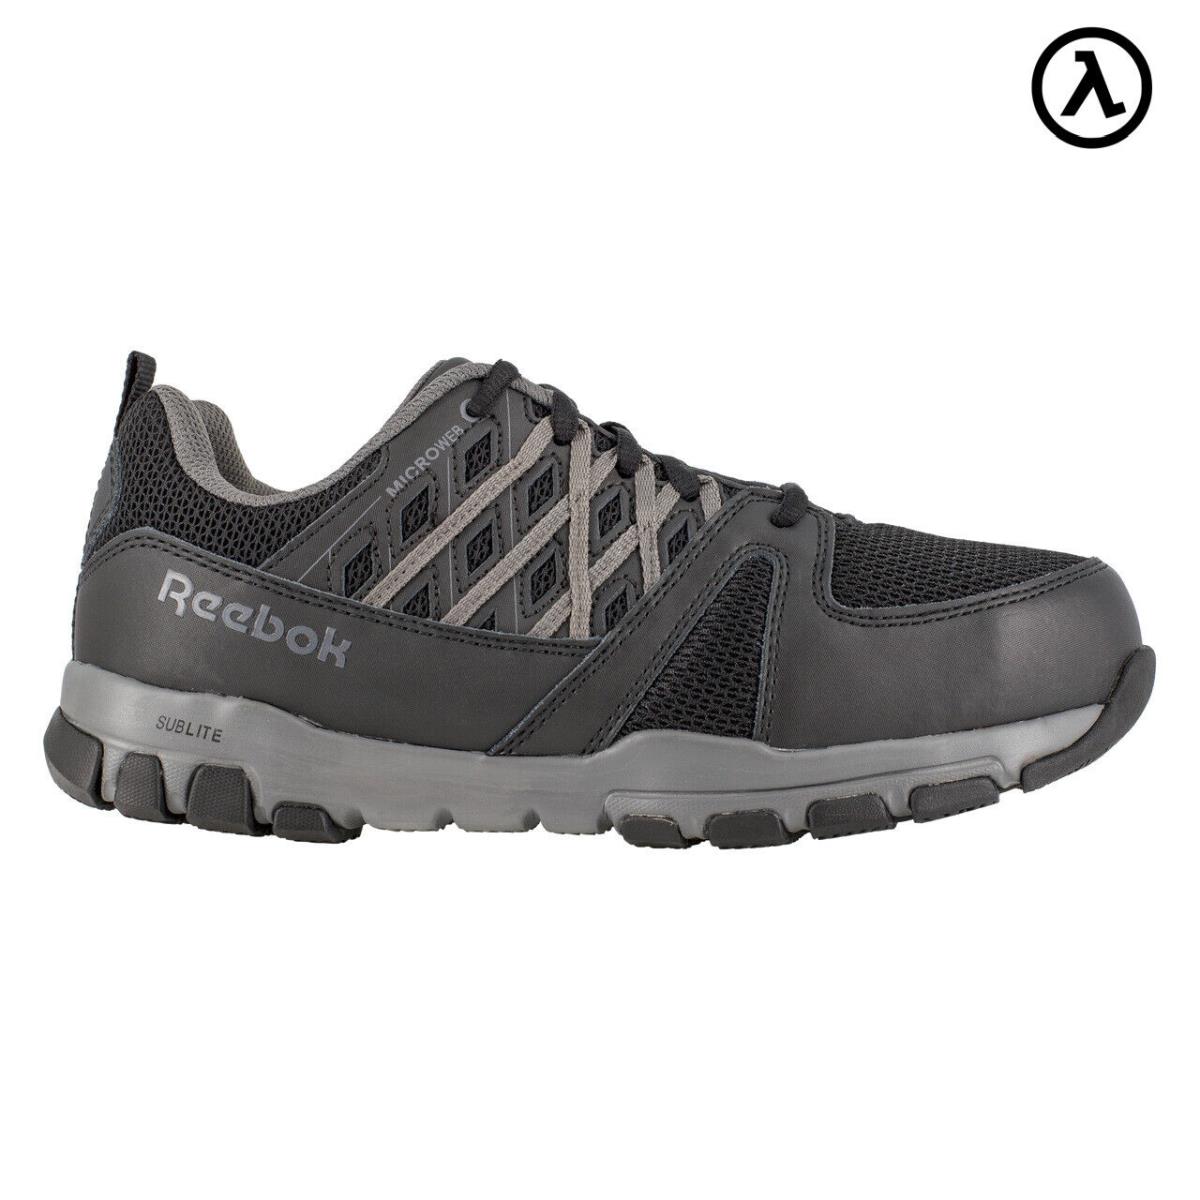 Reebok Sublite Work Men`s Athletic Work Shoe Black with Grey Trim Boots RB4016 - Black with Grey Trim